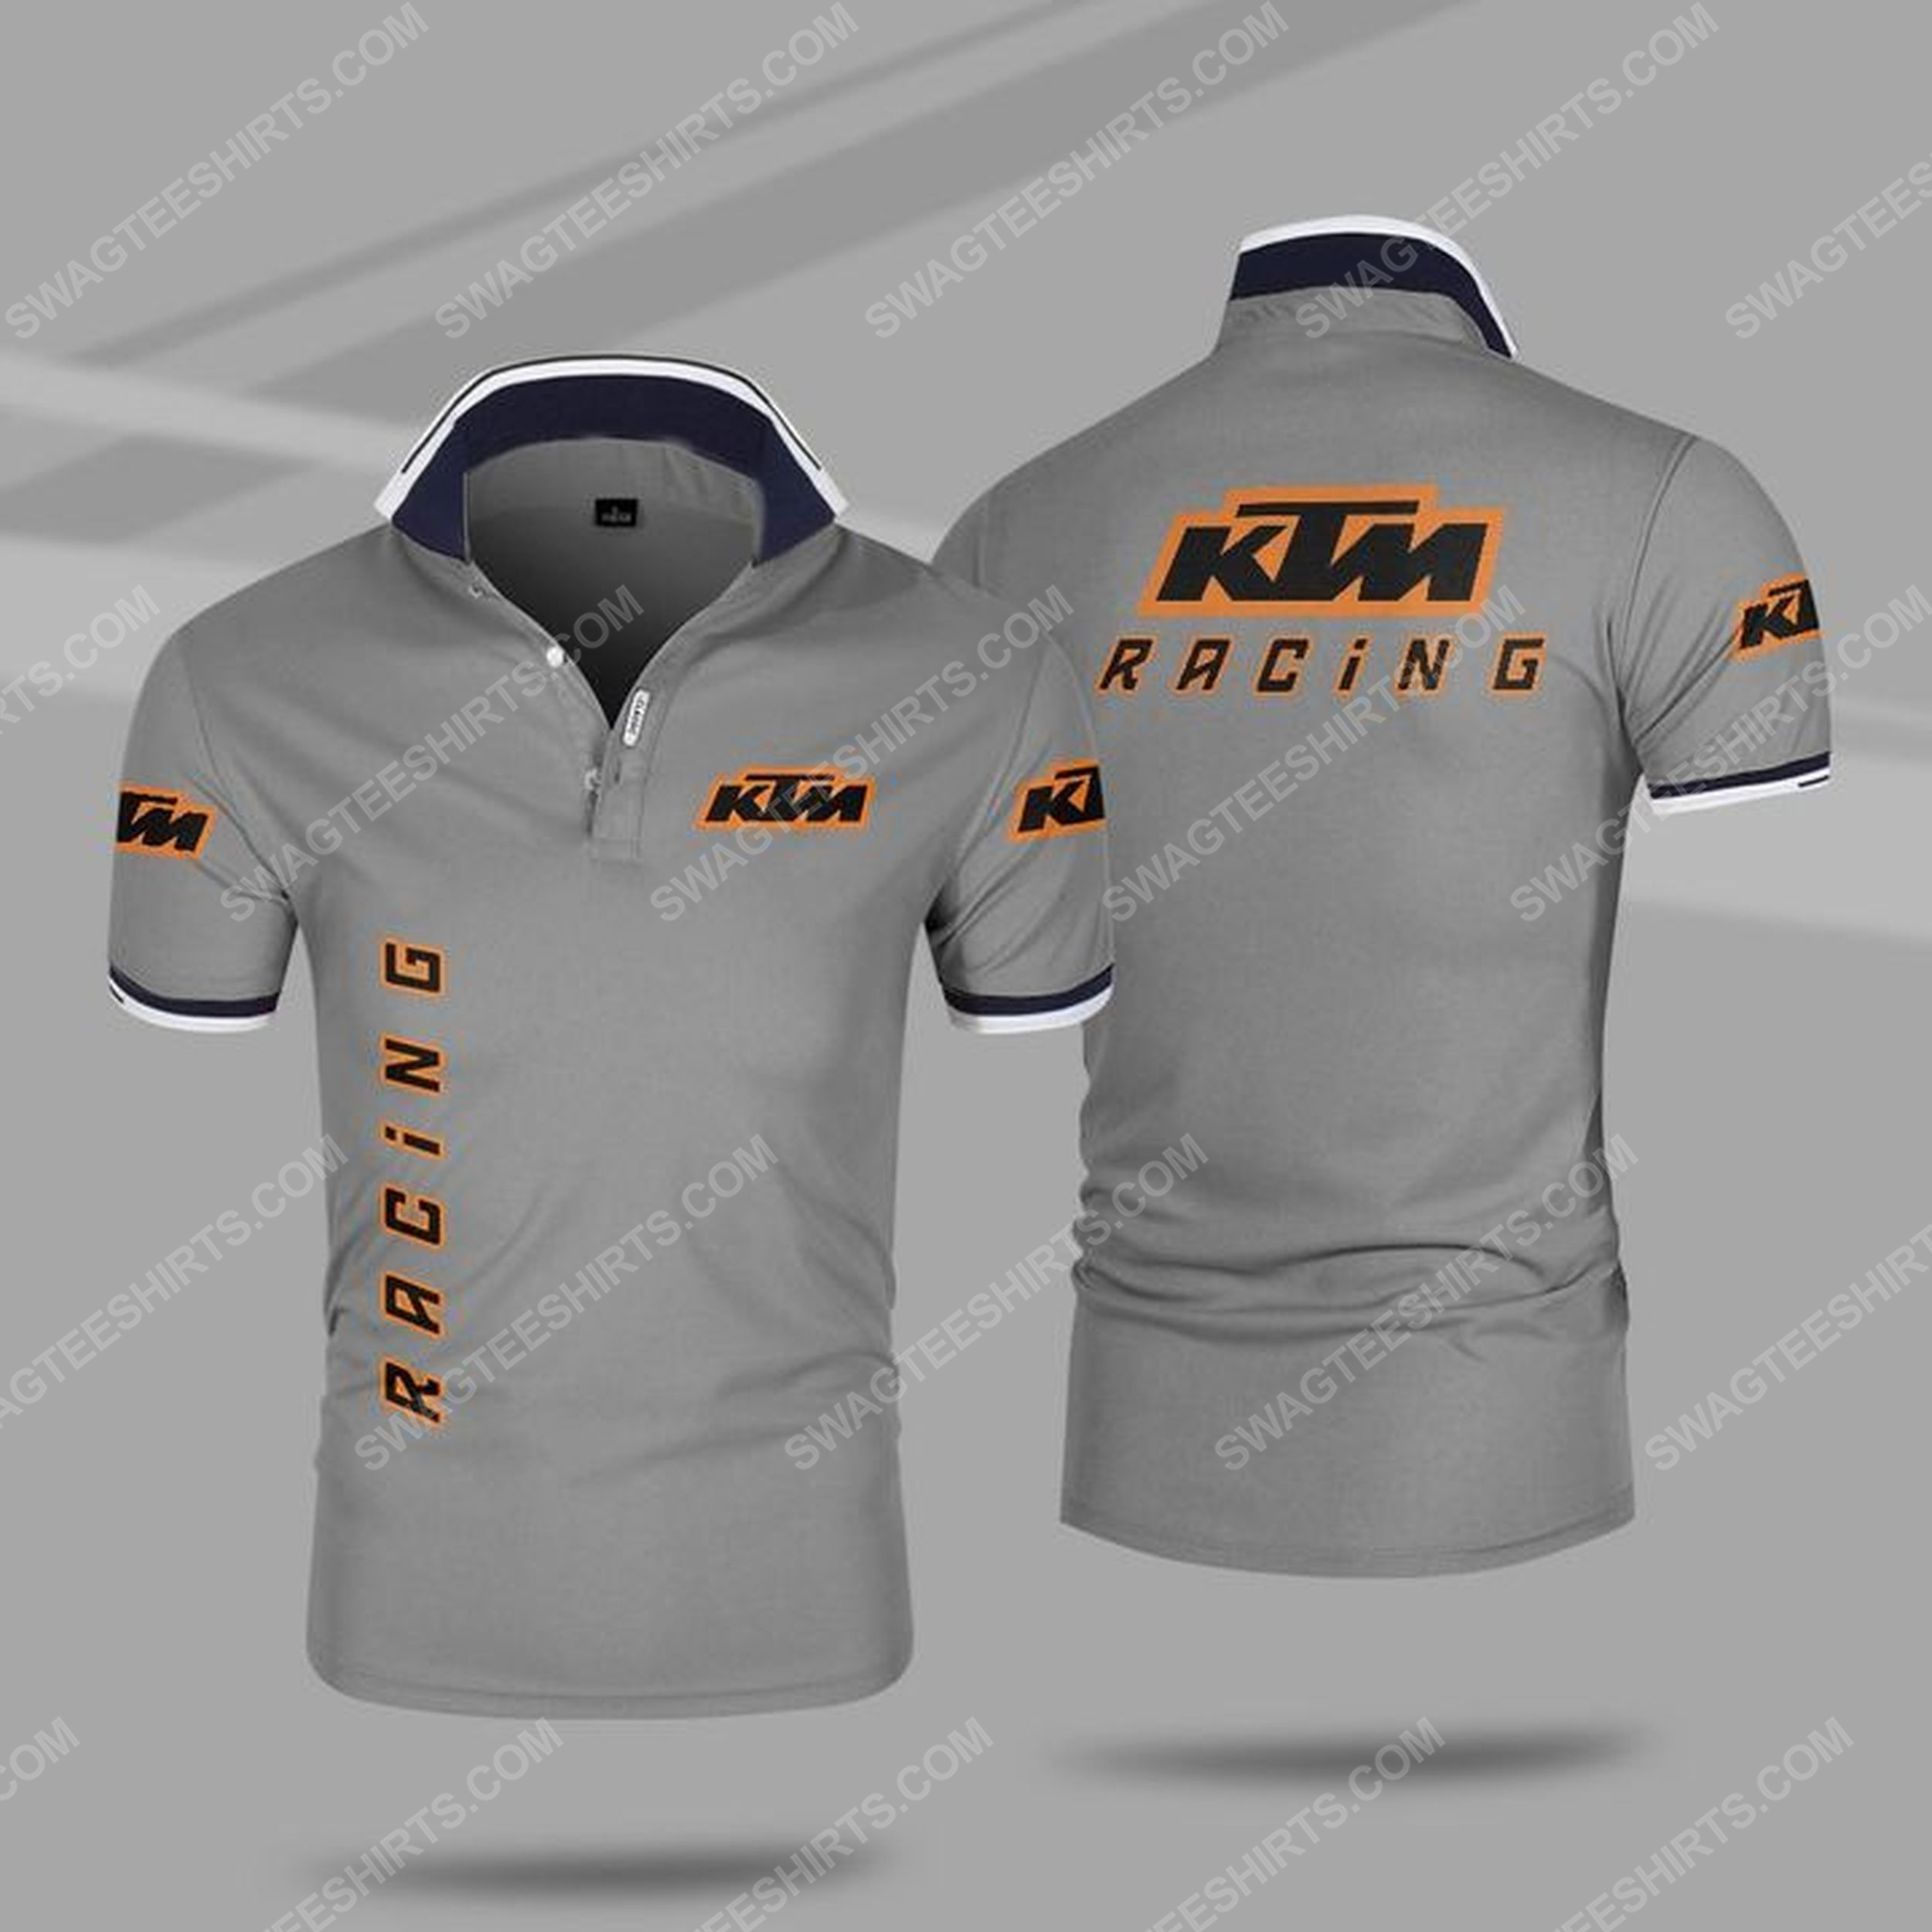 The ktm motorcycle racing all over print polo shirt - gray 1